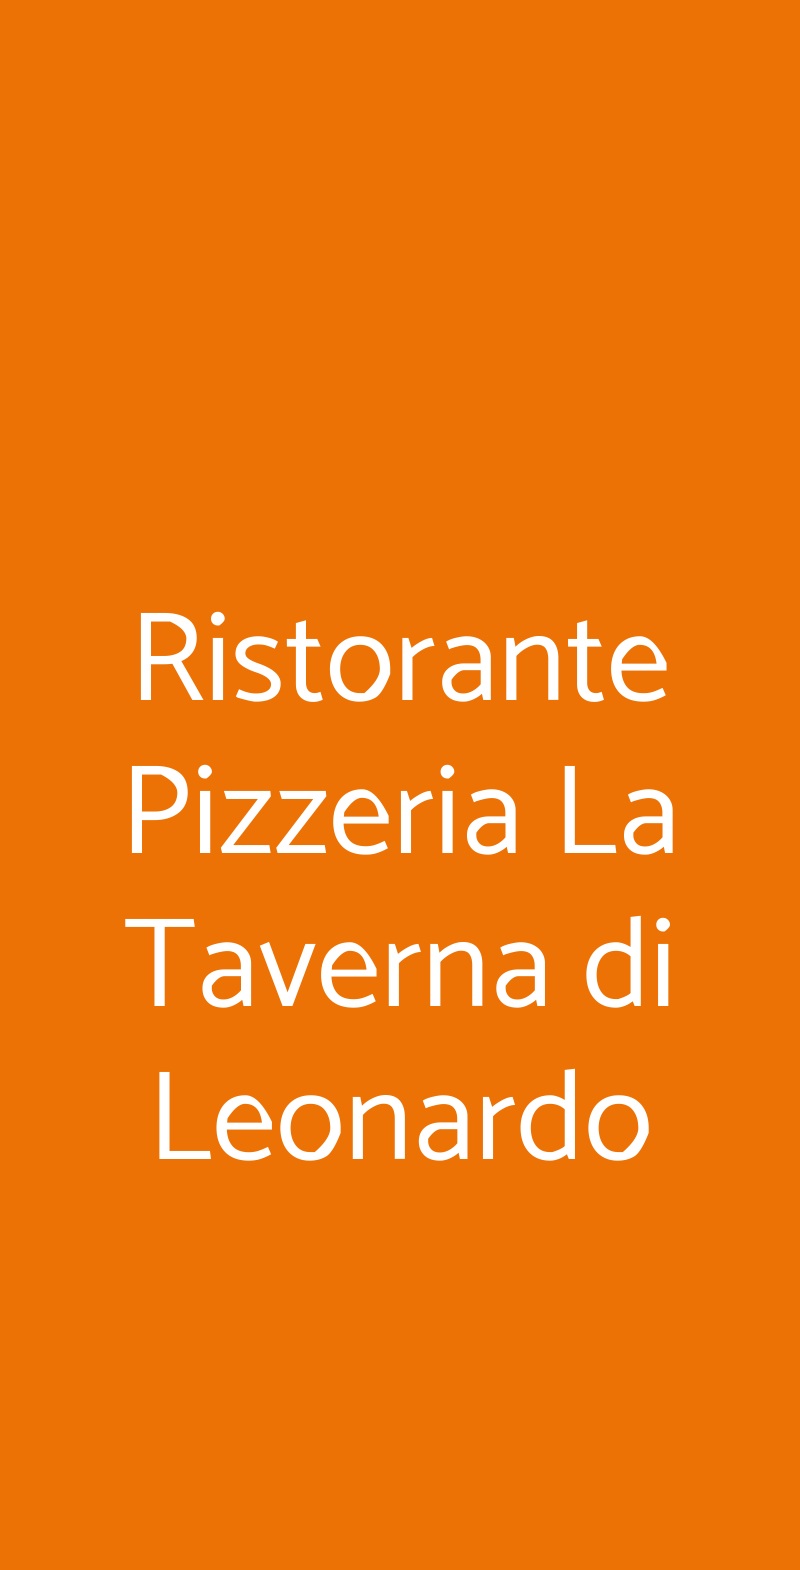 Ristorante Pizzeria La Taverna di Leonardo Brivio menù 1 pagina